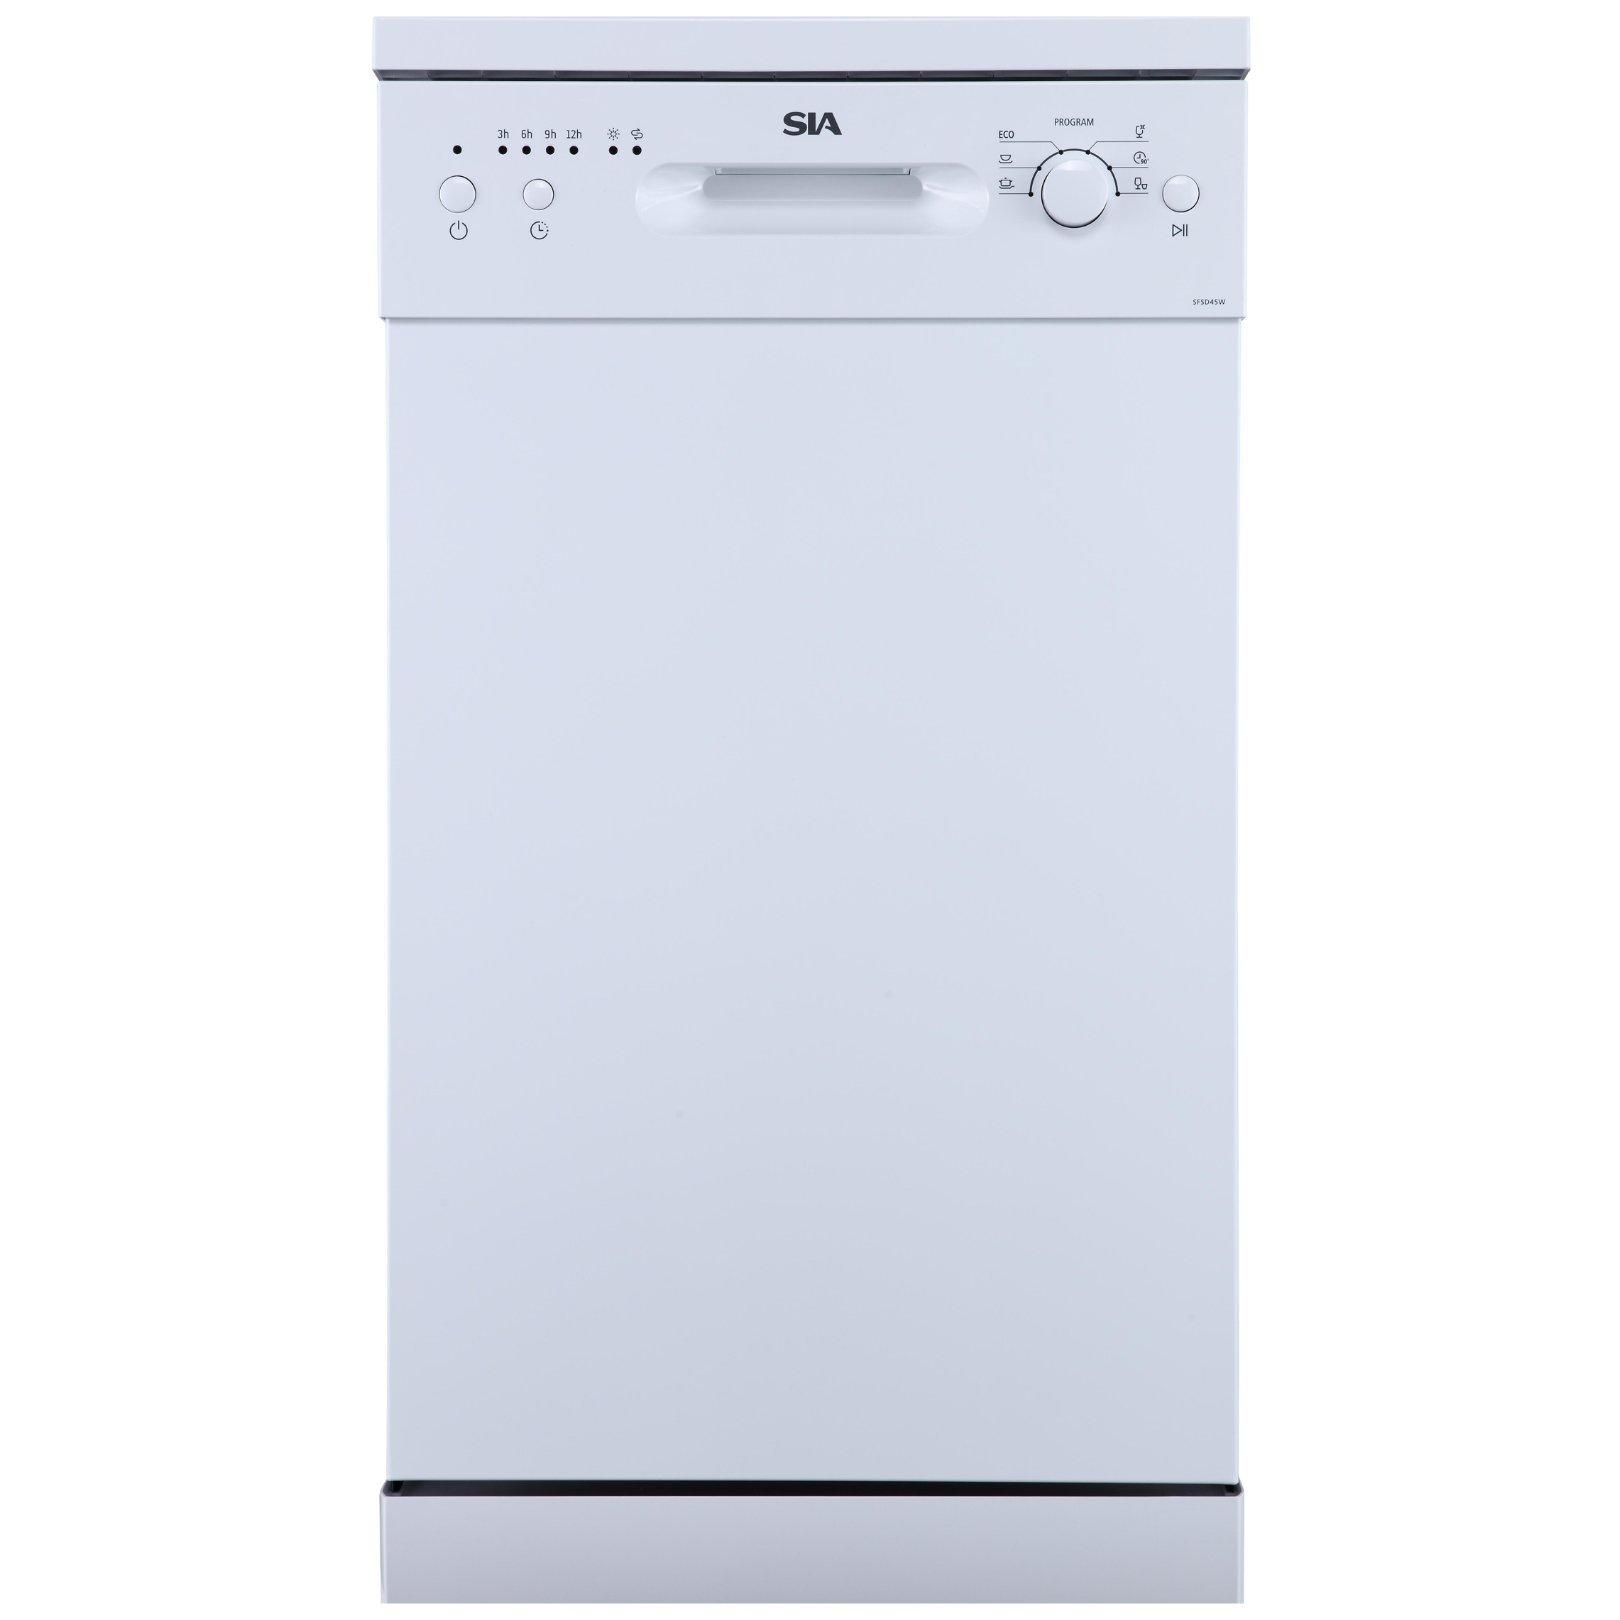 45cm White Freestanding Dishwasher, 9 Places - SFSD45W